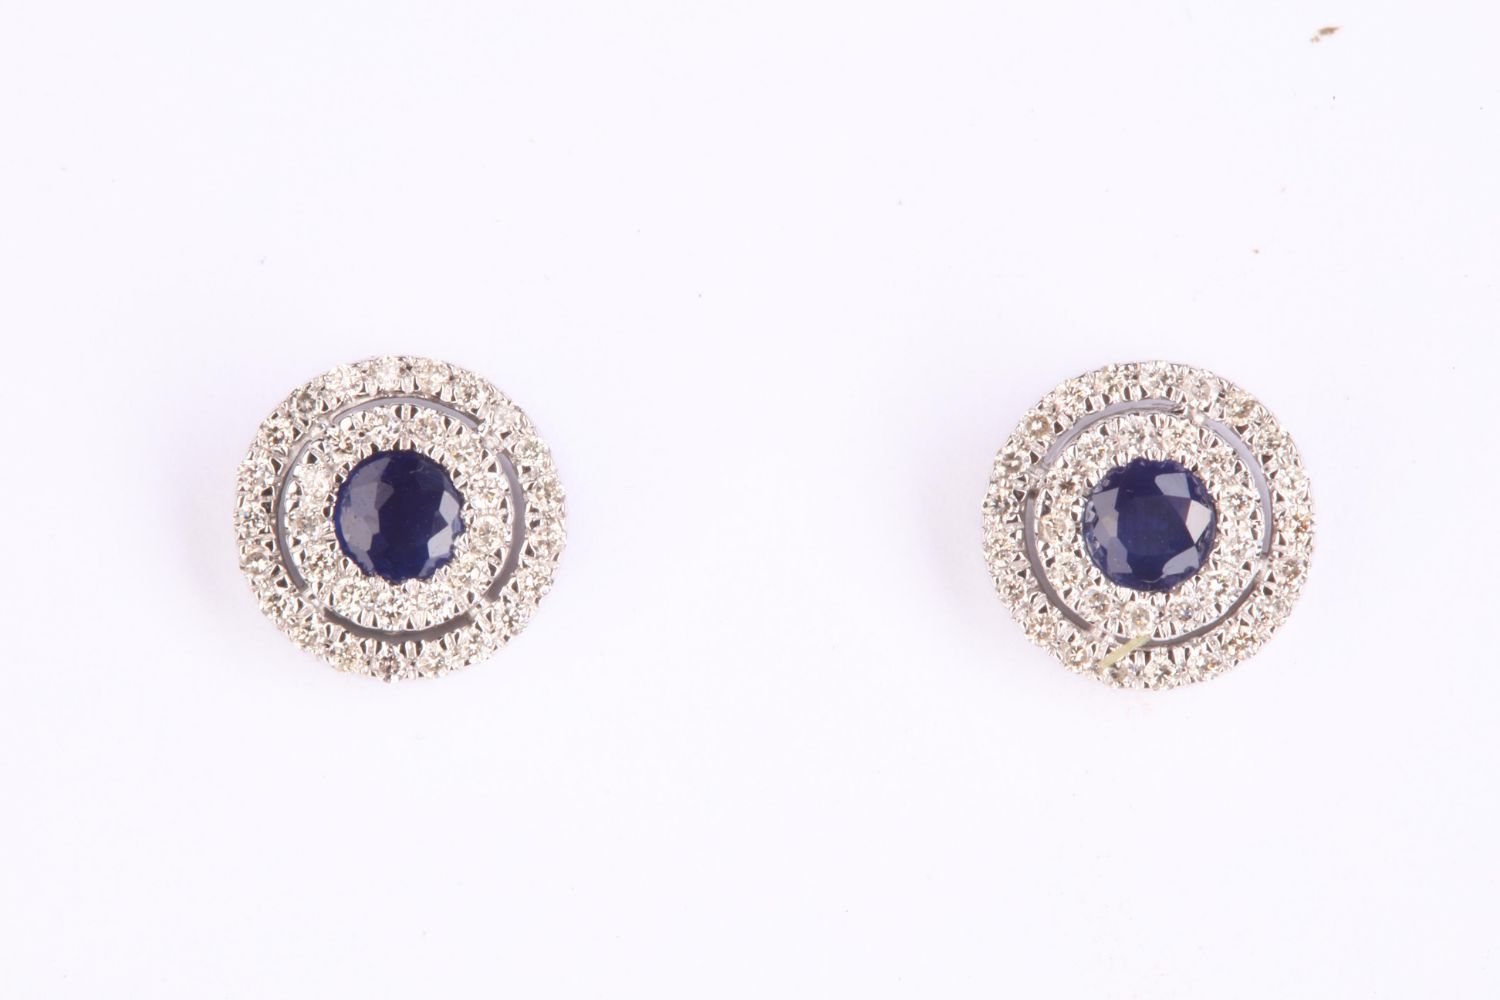 Stunning Diamond Jewellery, Vintage Rolex Date, Sovereigns, Precious Metals, Designer Cartier & Tiffany Rings Plus More!